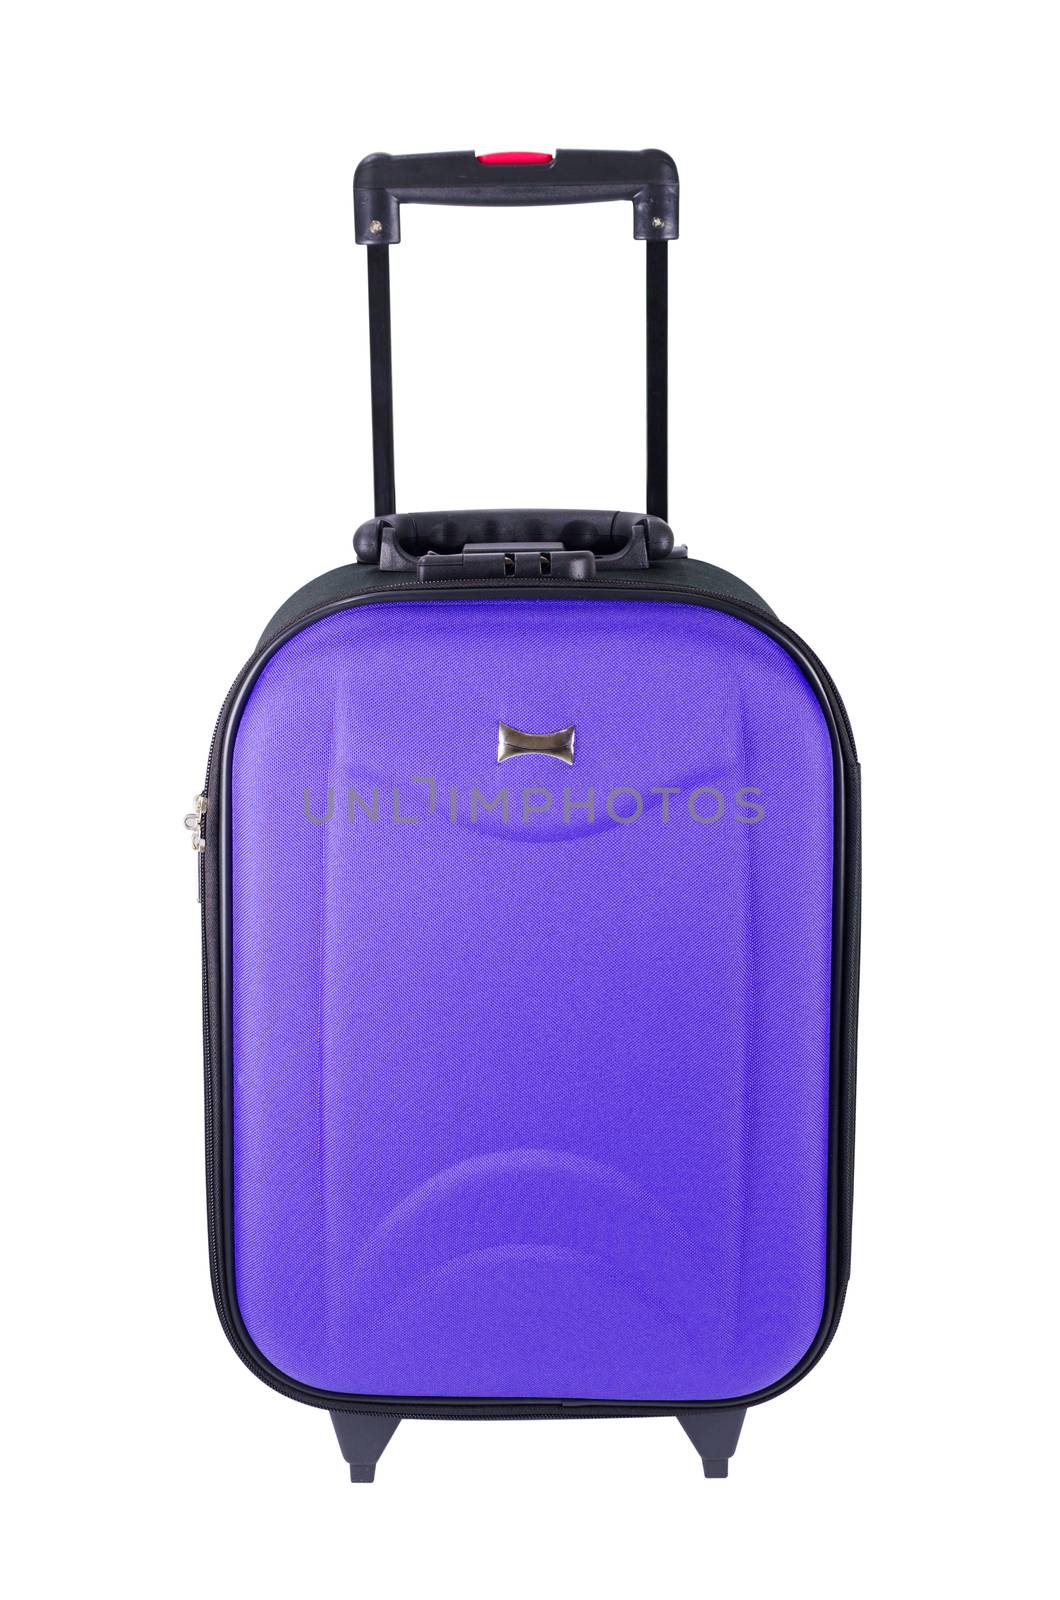 Violet suitcase ,Travel luggage isolated on the white background.